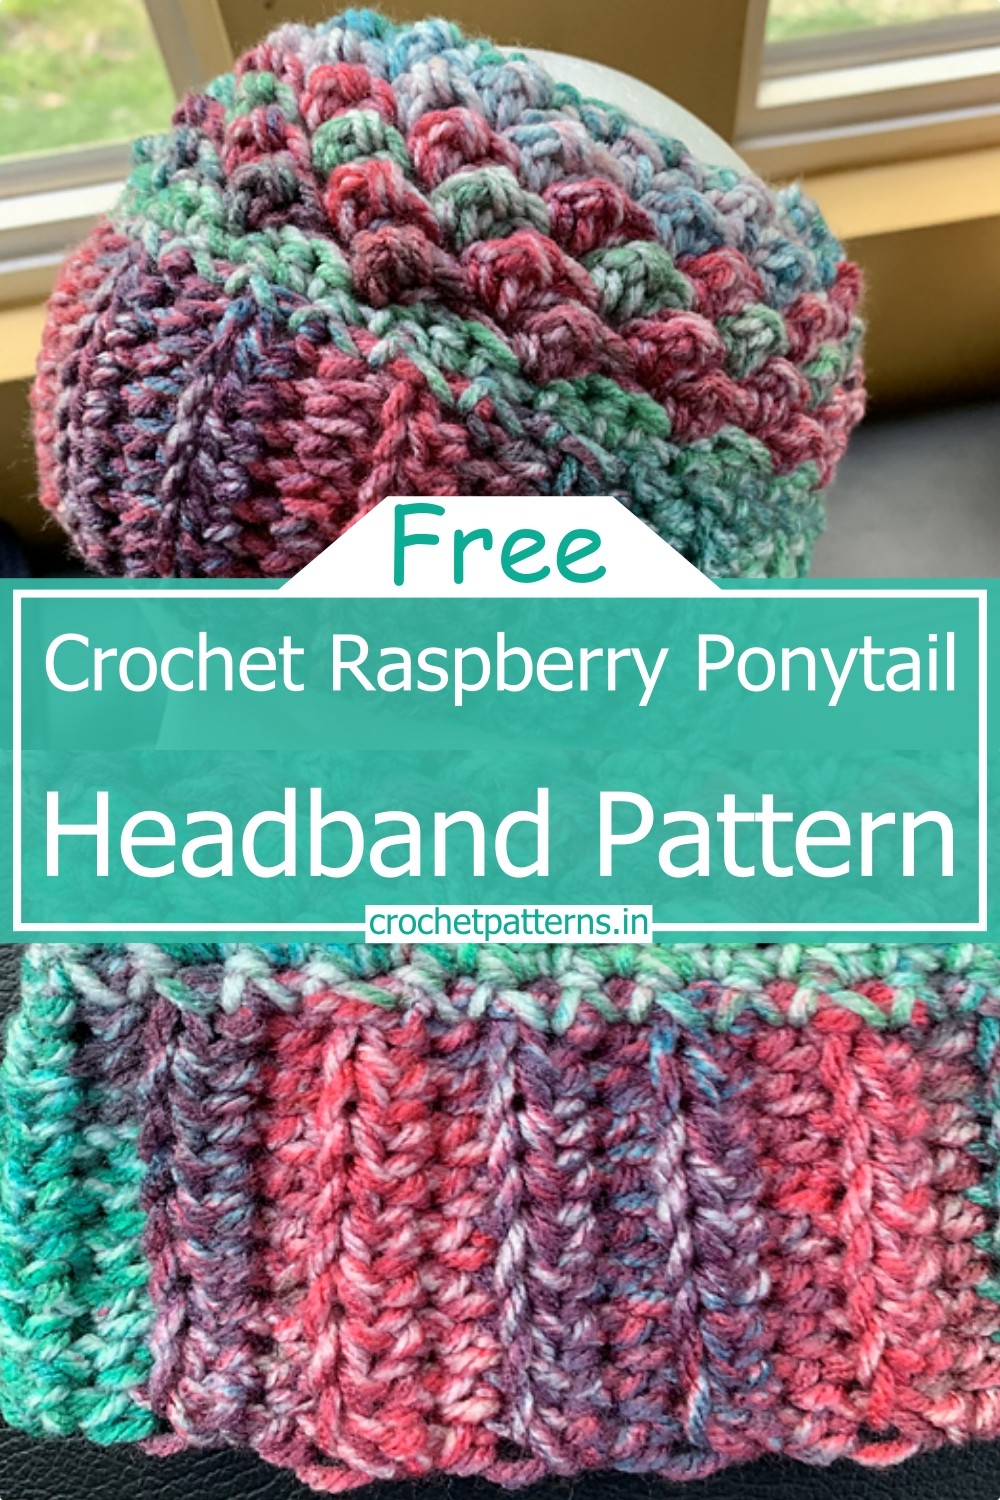 Crochet Raspberry Ponytail Headband Pattern